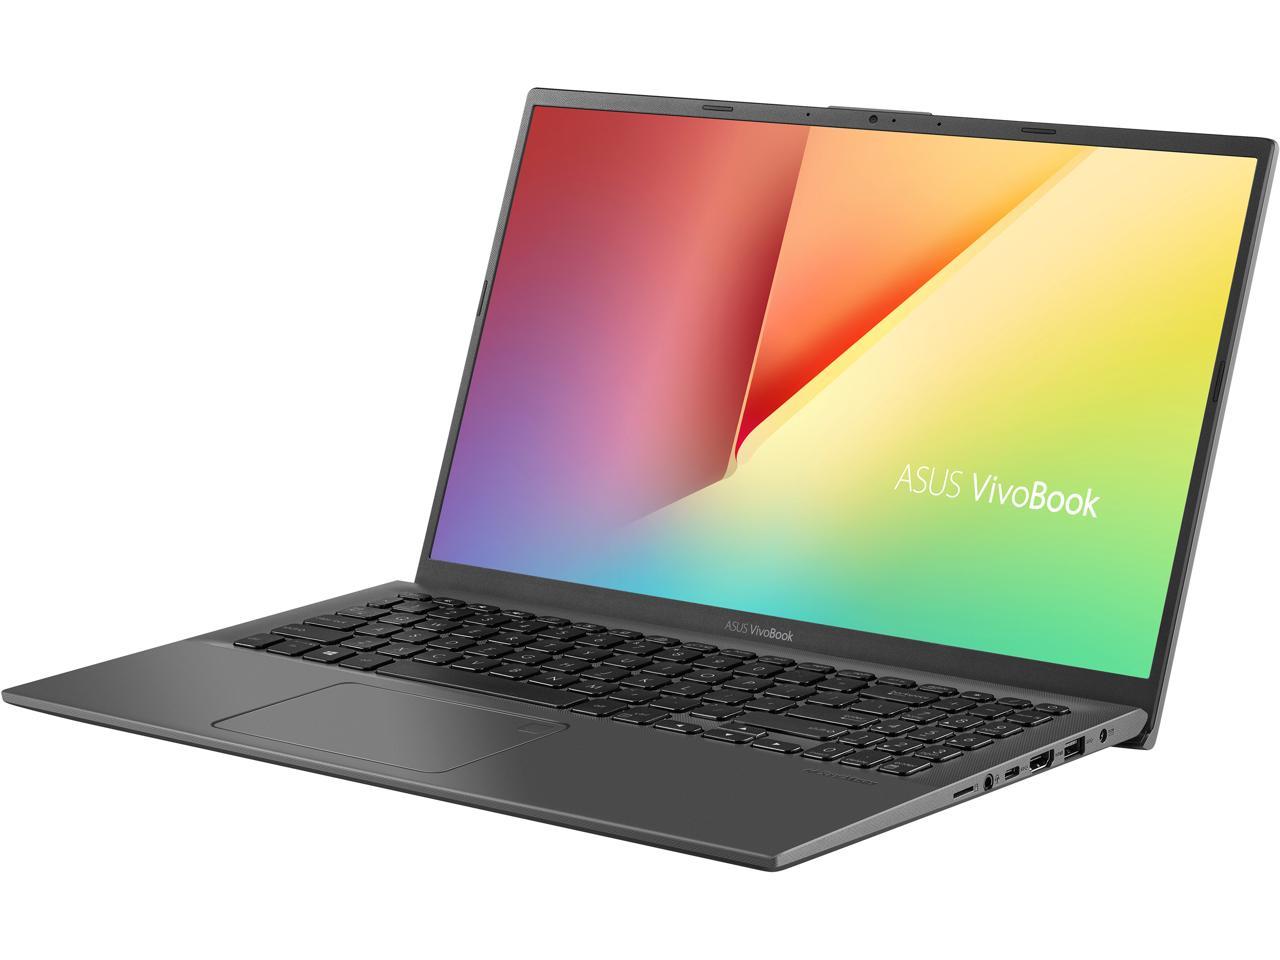 ASUS Laptop VivoBook F512DA-EB51 AMD Ryzen 5 3000 Series 3500U (2.10 GHz) 8 GB Memory 256 GB SSD AMD Radeon Vega 8 15.6" Windows 10 Home 64-bit